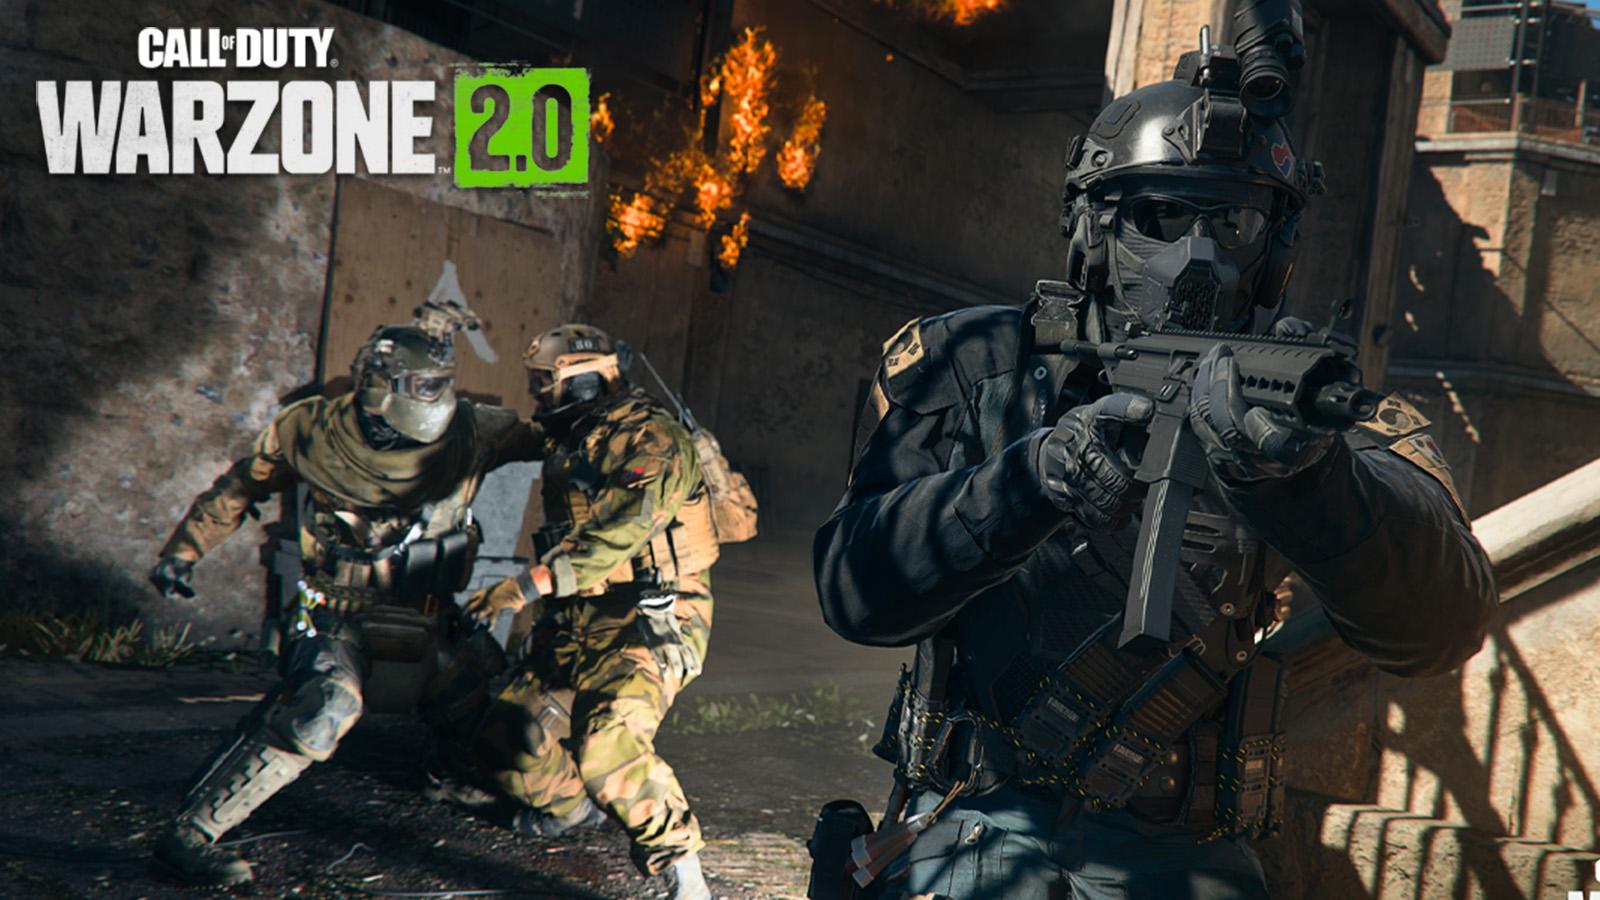 Modern Warfare 2 Season 2 Reloaded Download & Content Preview Revealed! 